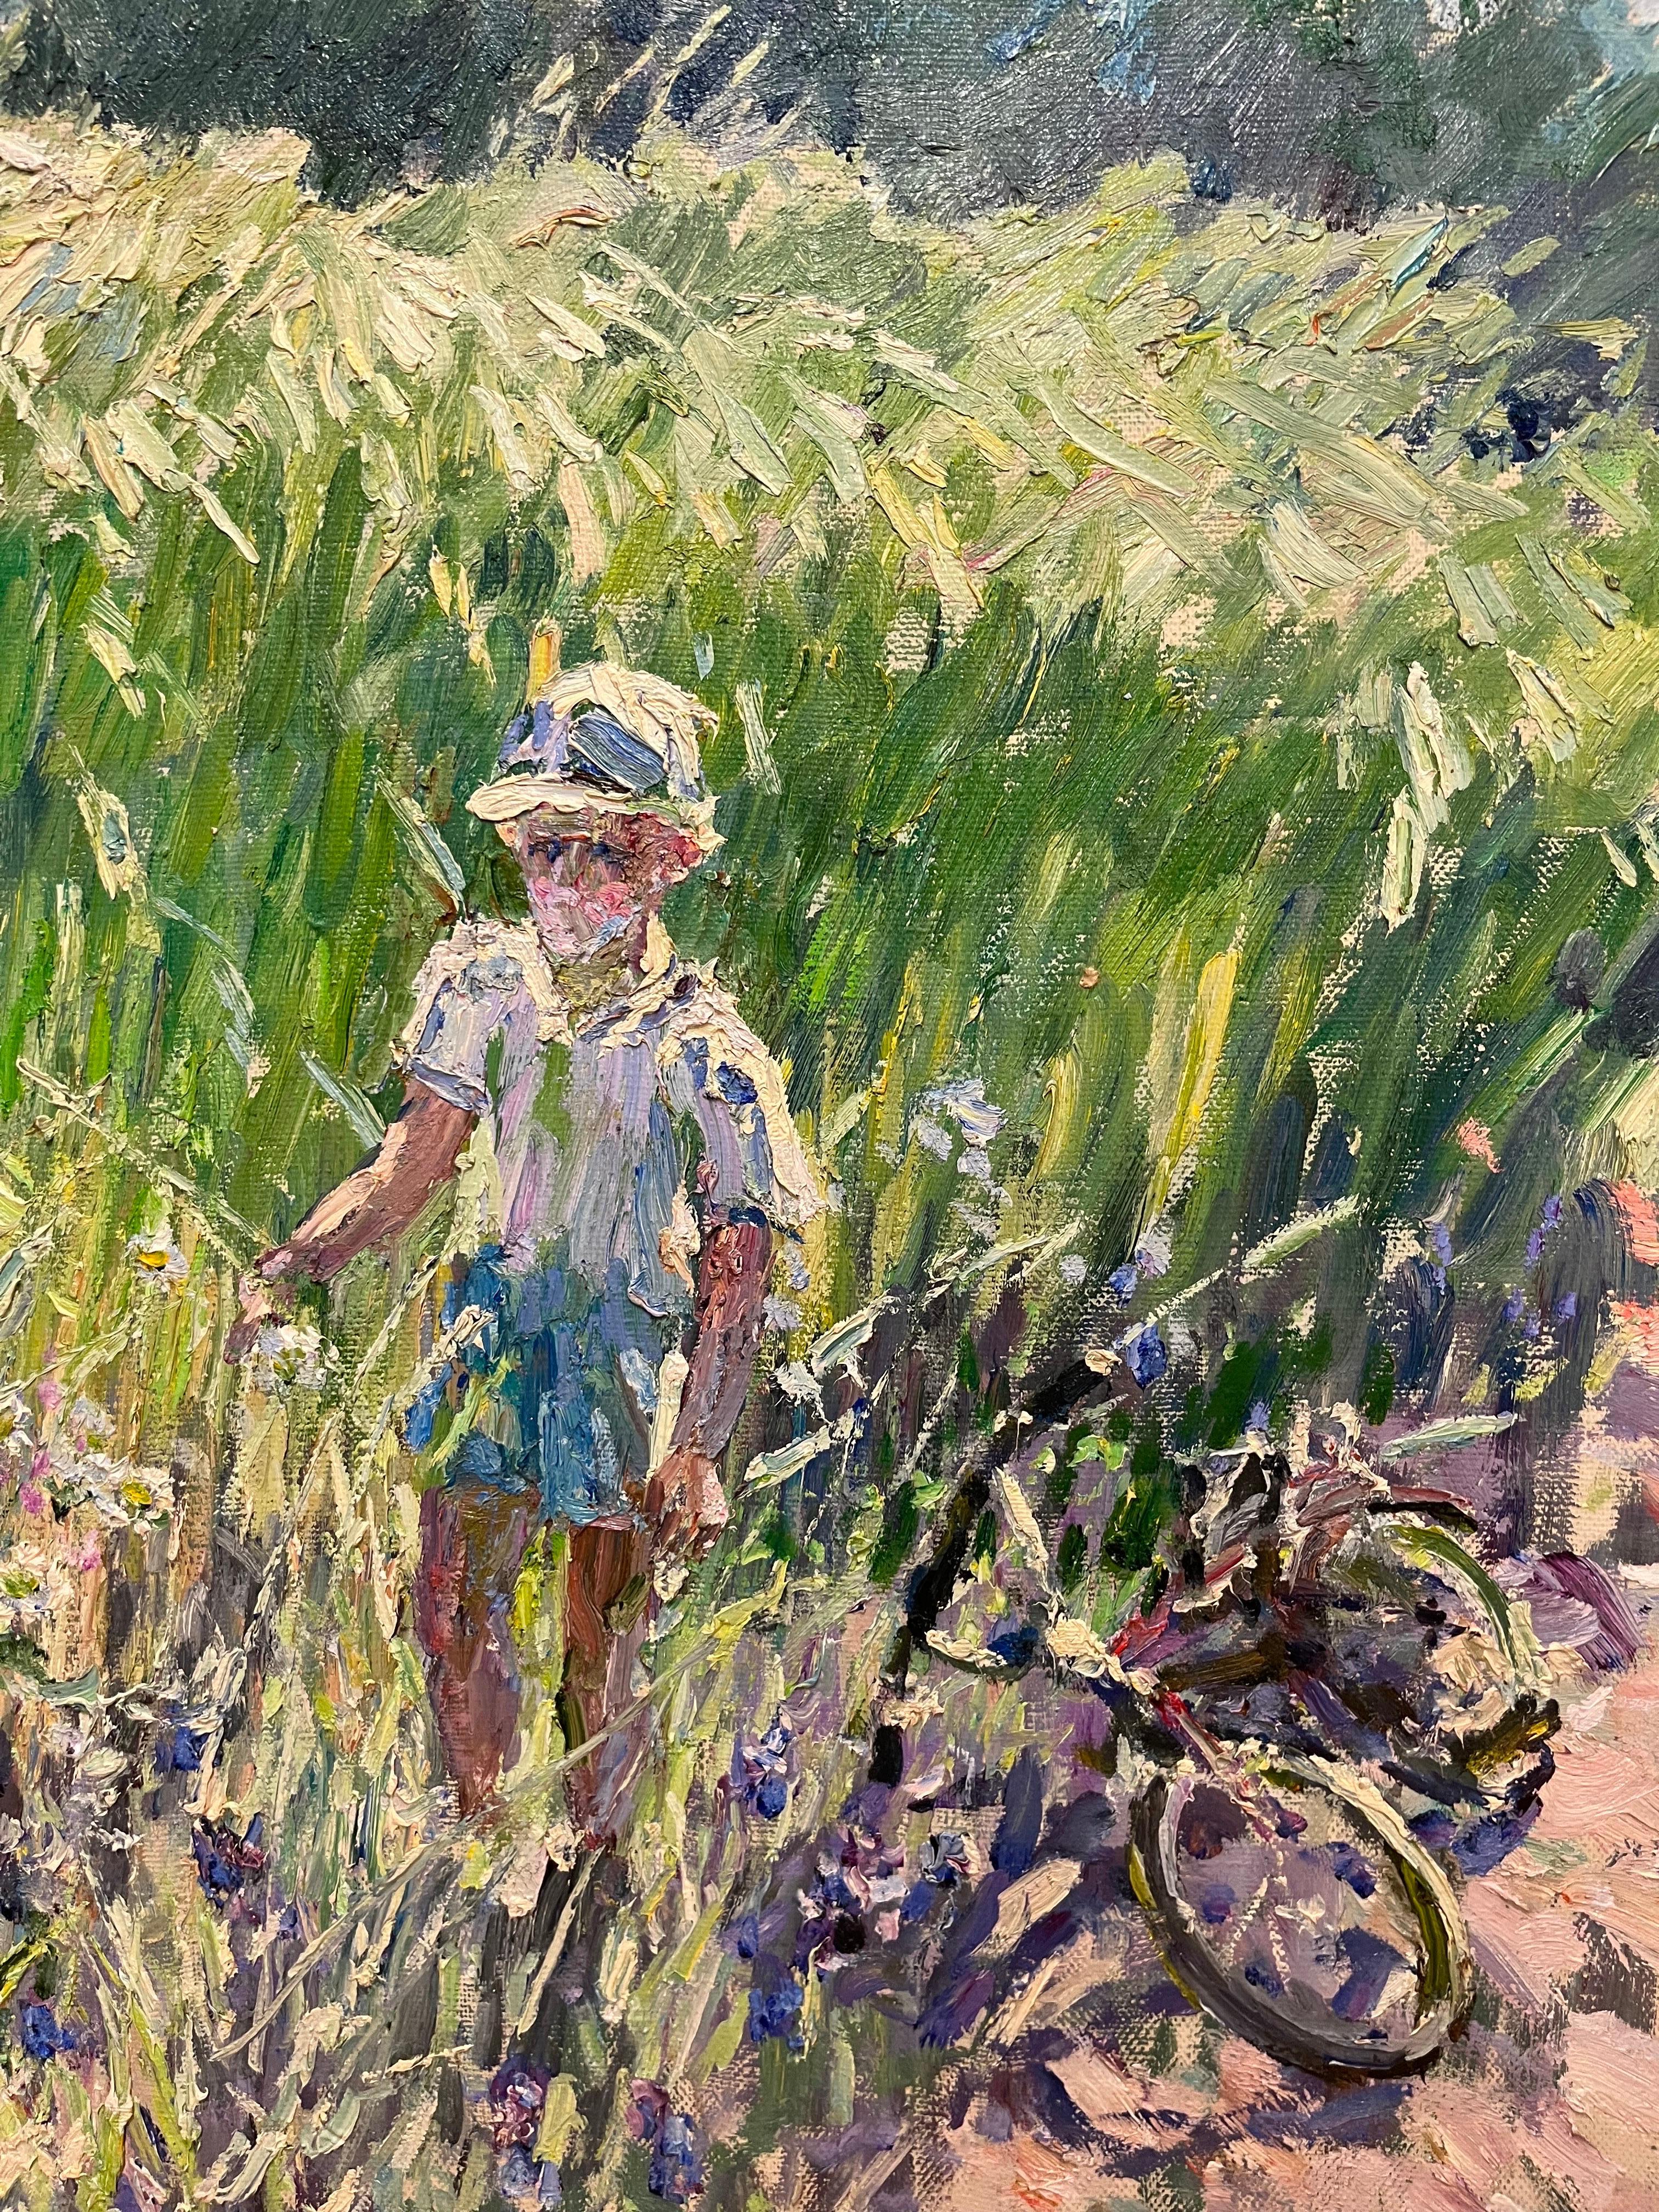 « Eye in bloom », jeune enfant dans un champ fleuri, huile cm. 120 x 91,  1999 - Painting de Georgij Moroz